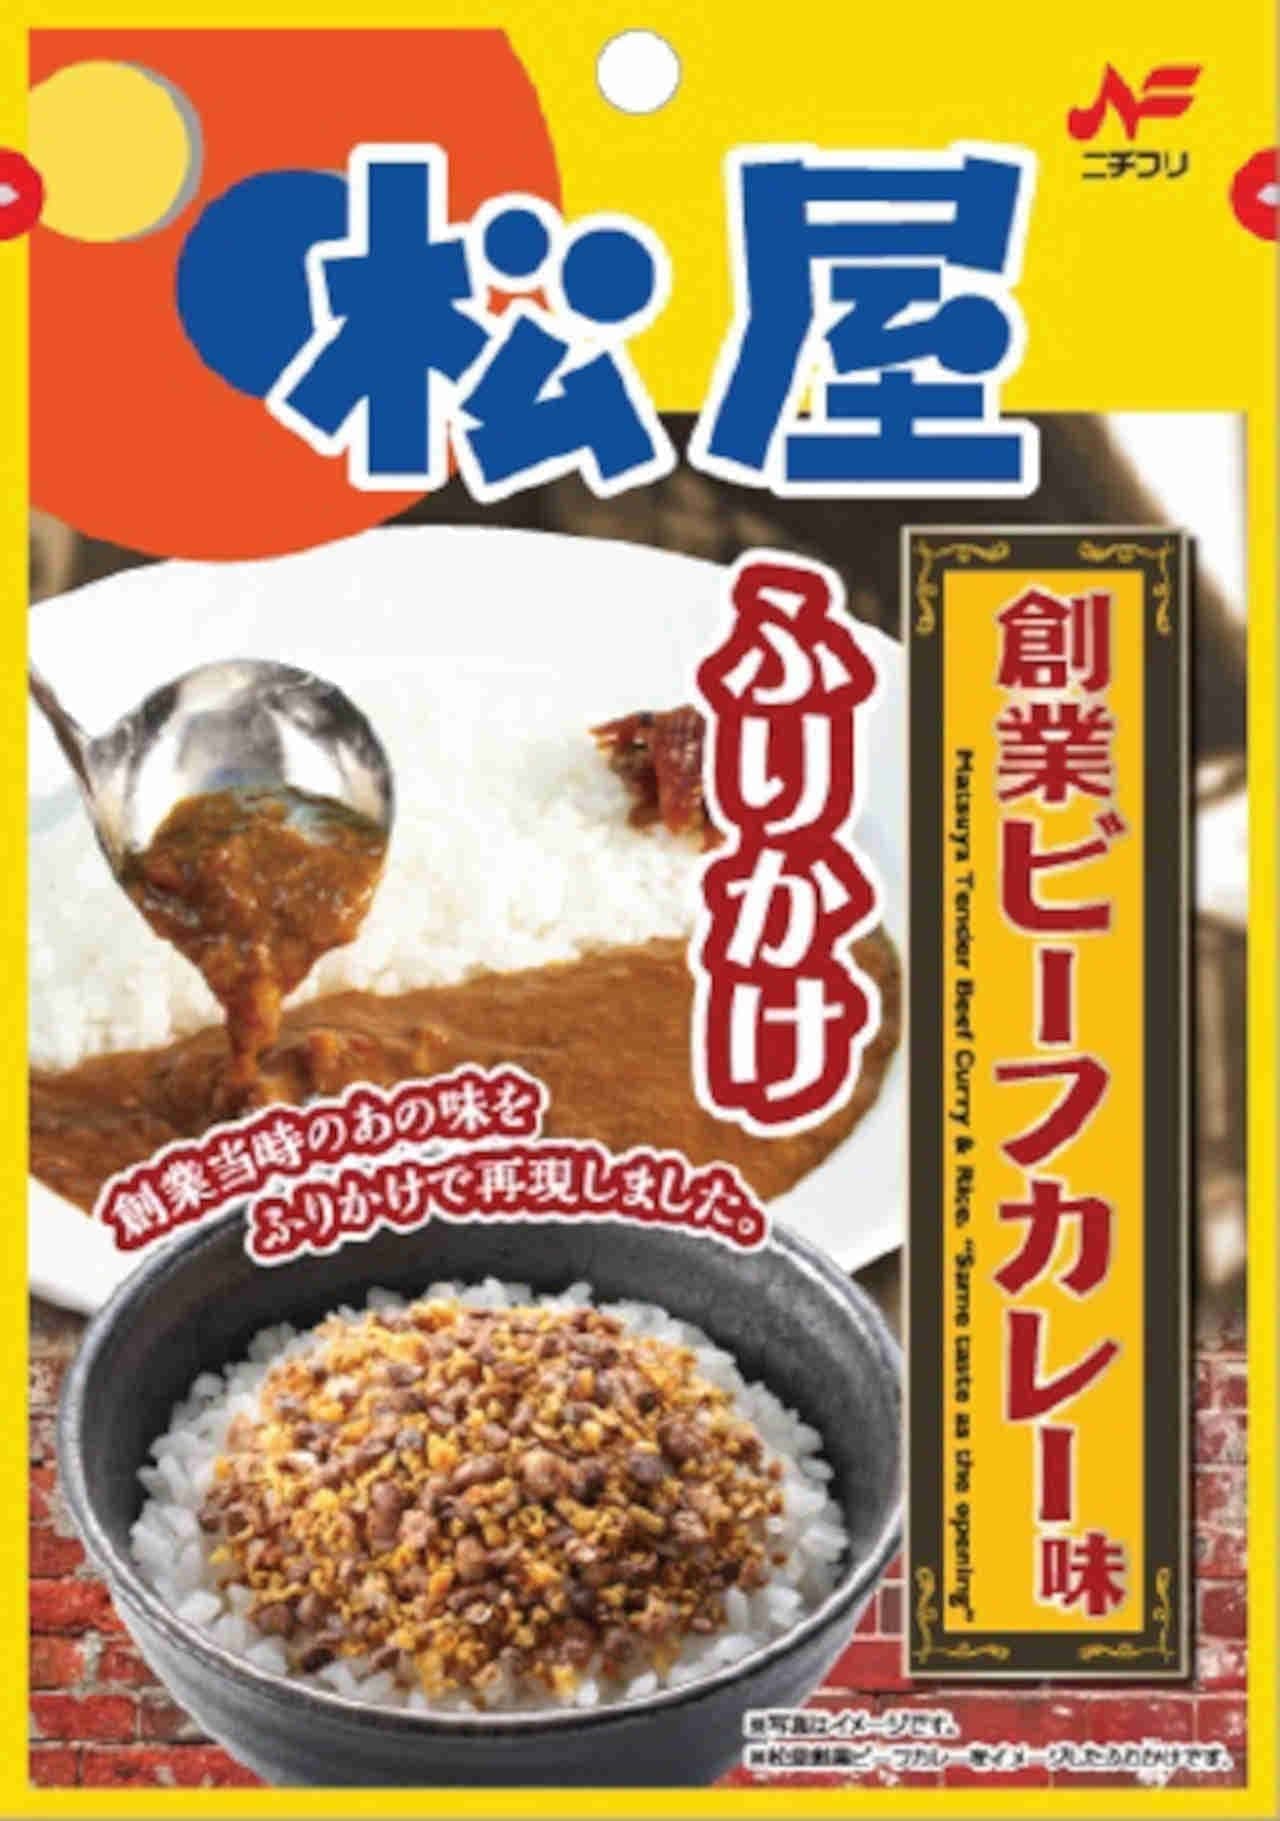 Nichifuri Foods "Matsuya Founders Beef Curry Flavor Furikake